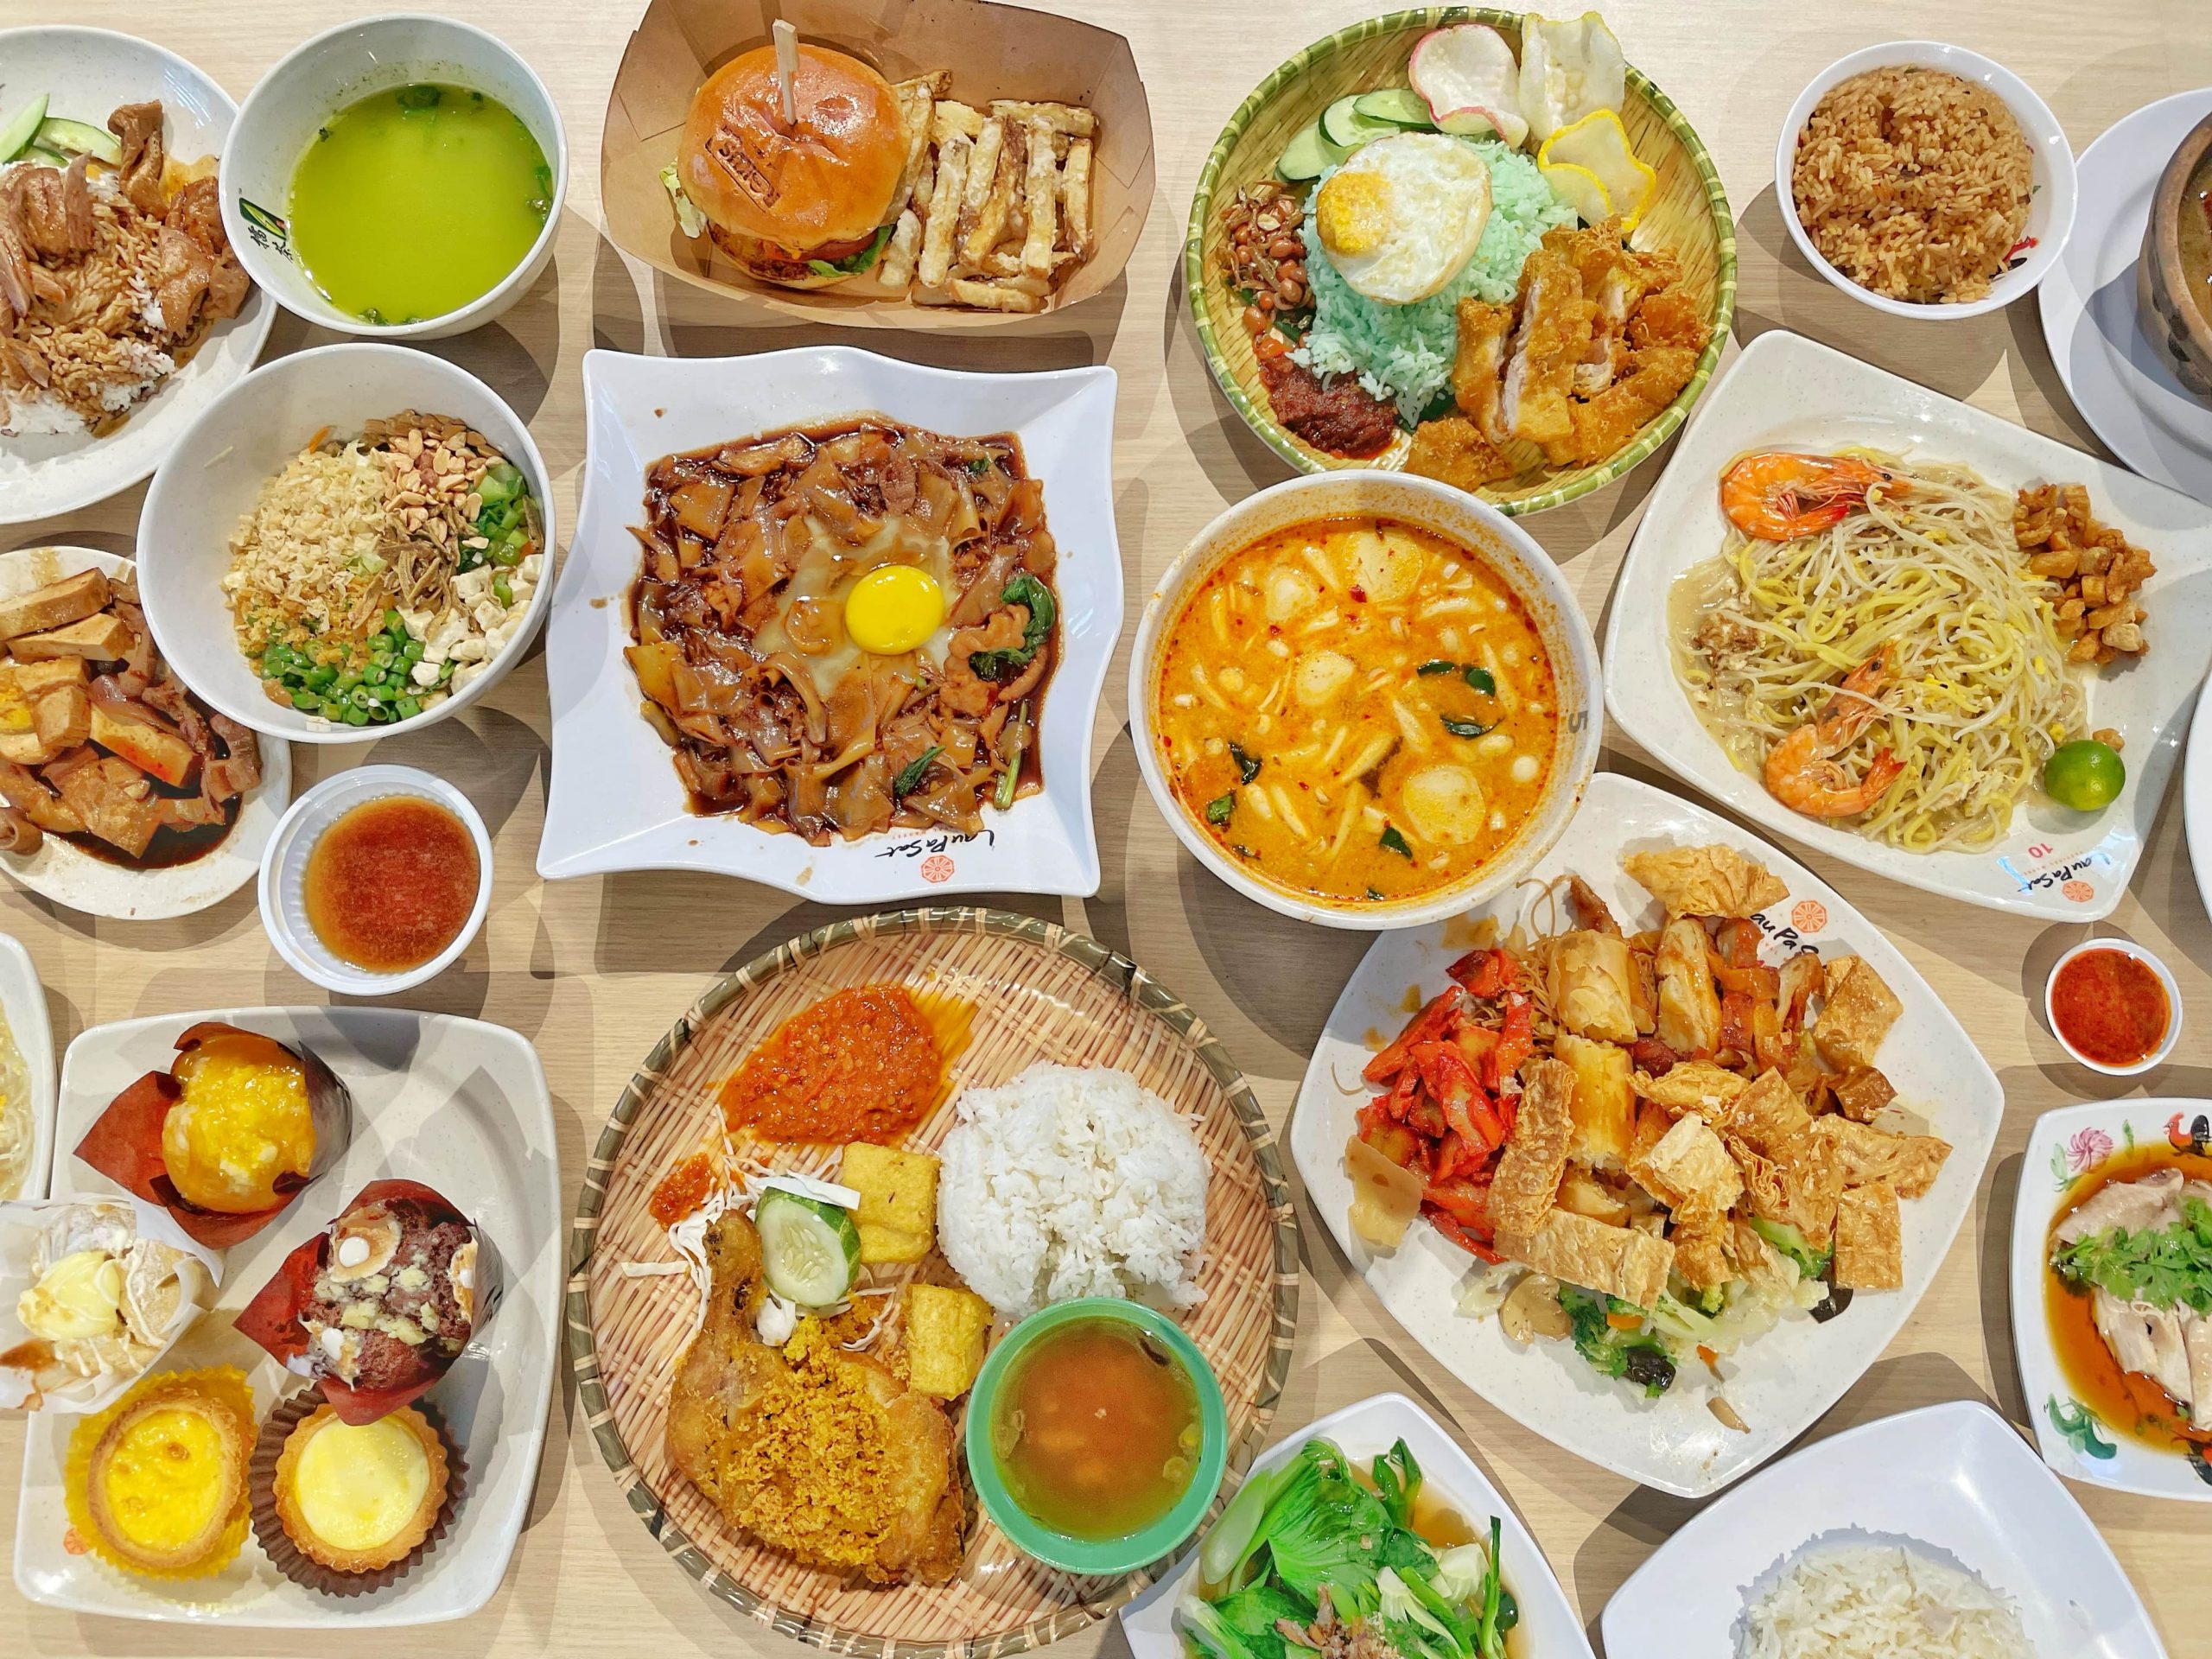 Lau Pa Sat_Food hall_range of dishes